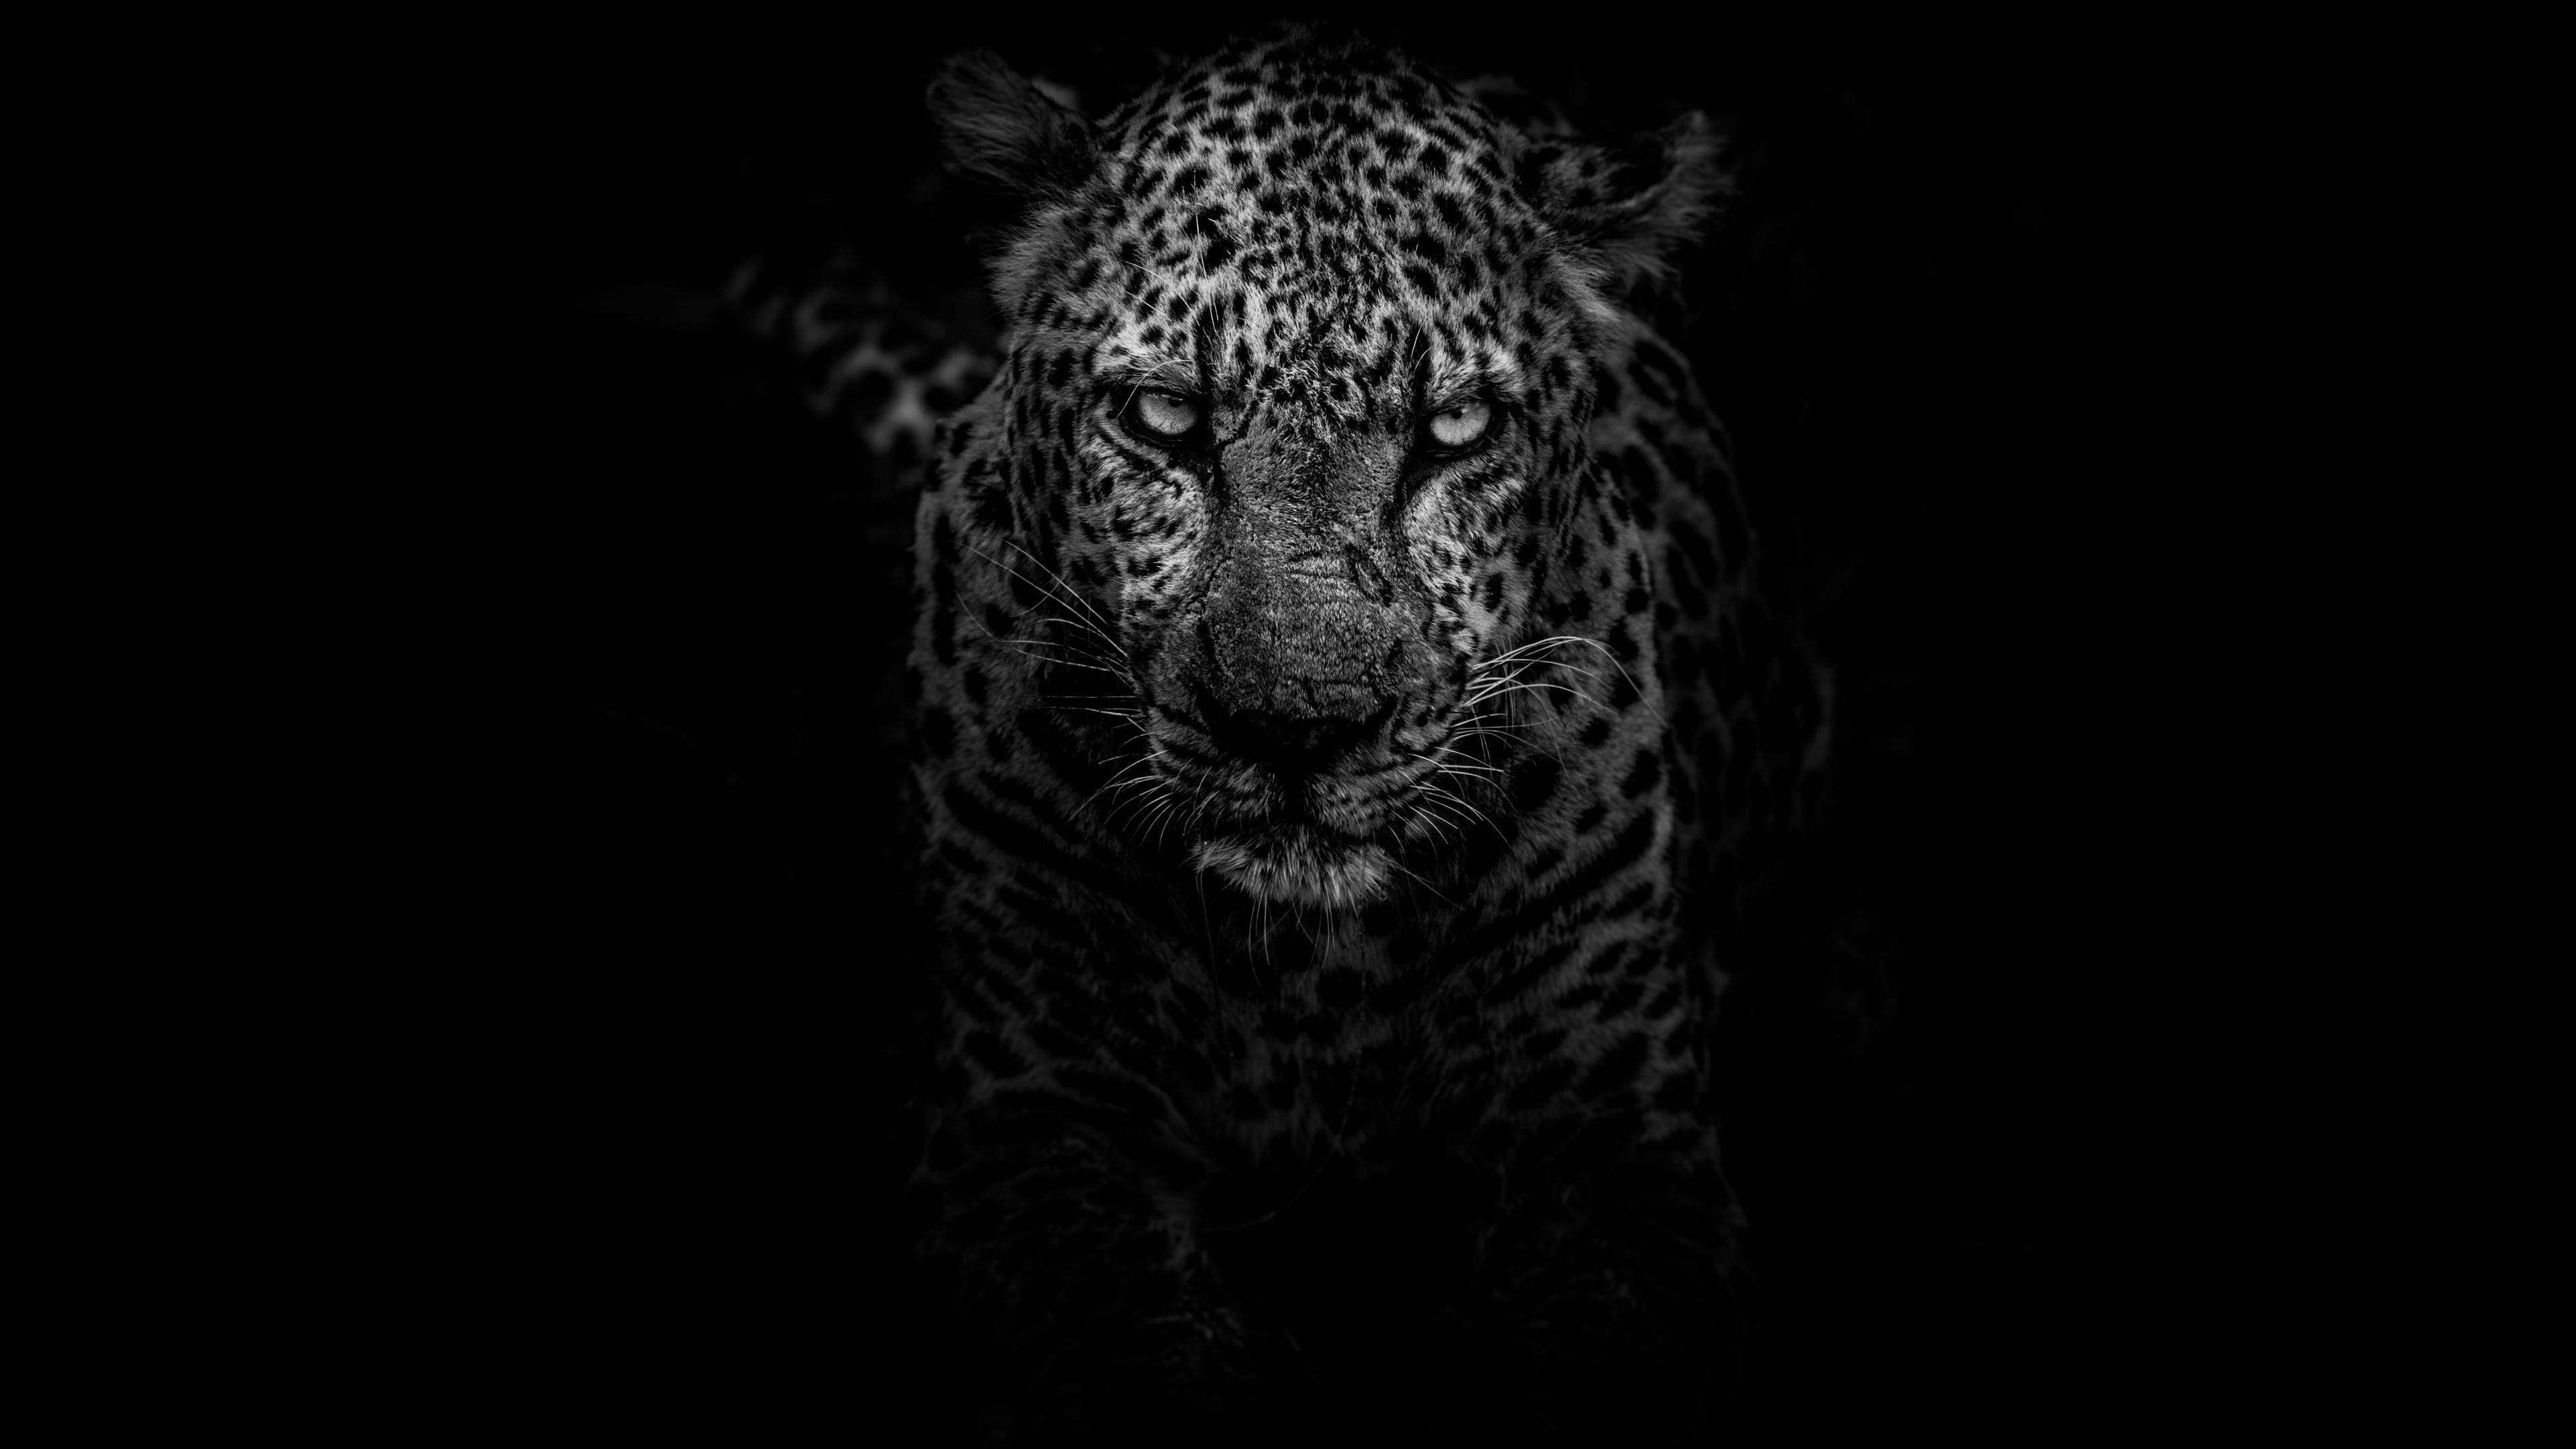 Leopard Dark Monochrome 4k monochrome wallpaper, leopard wallpaper, hd- wallpaper, dark wallpaper, black. Leopard picture, Leopard wallpaper, Animal wallpaper